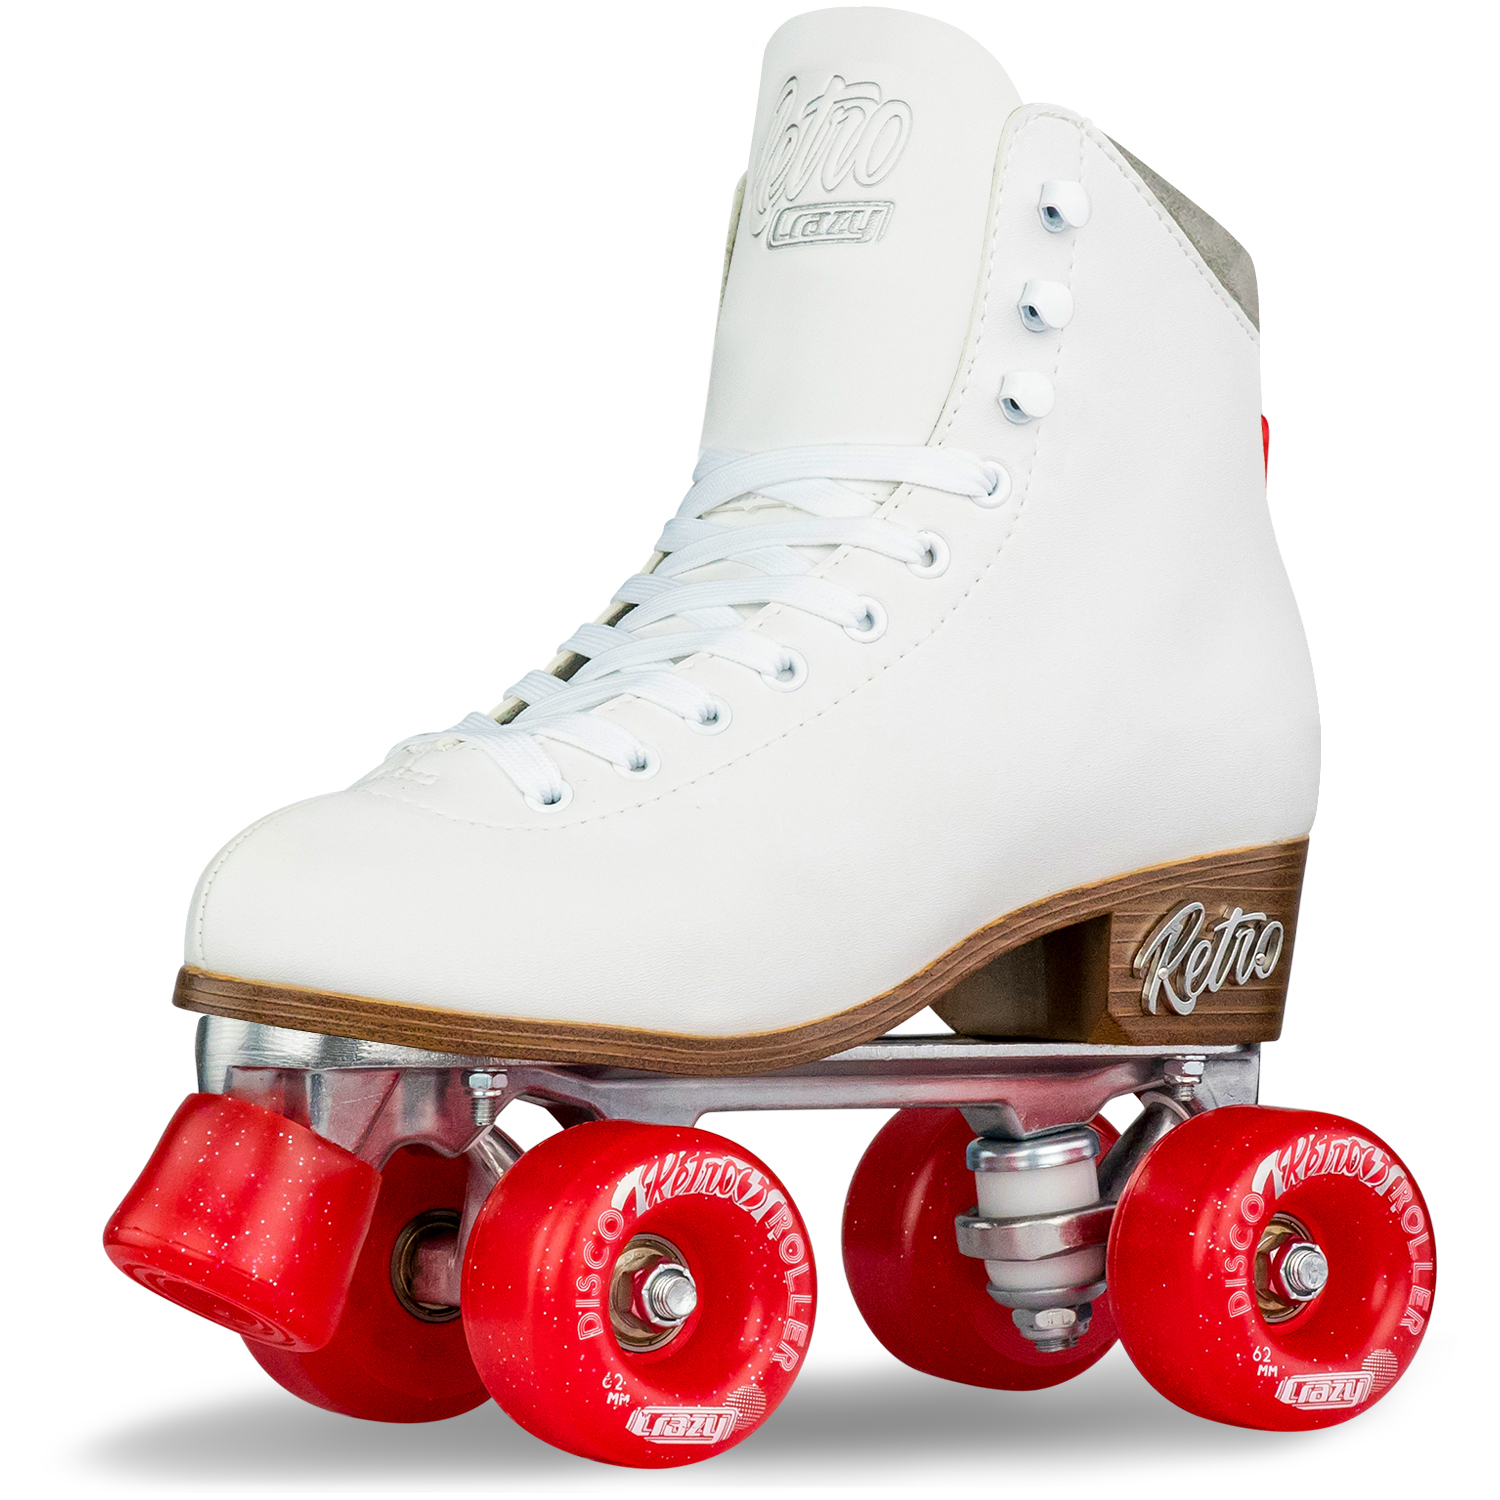 Retro Roller Skates | Adjustable Or Fixed Sizes | Classic Qu